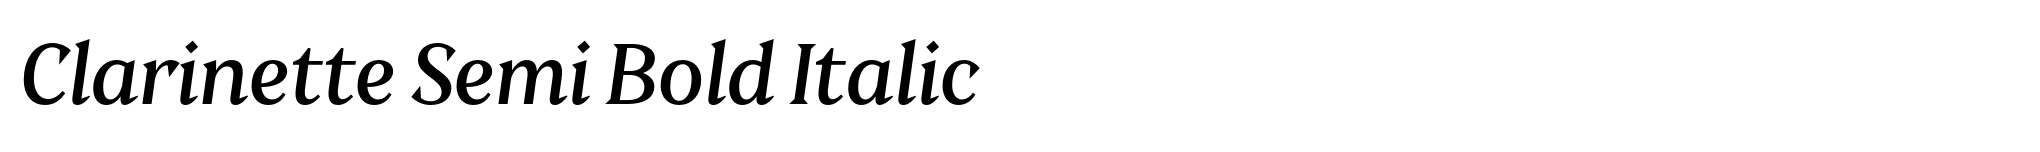 Clarinette Semi Bold Italic image